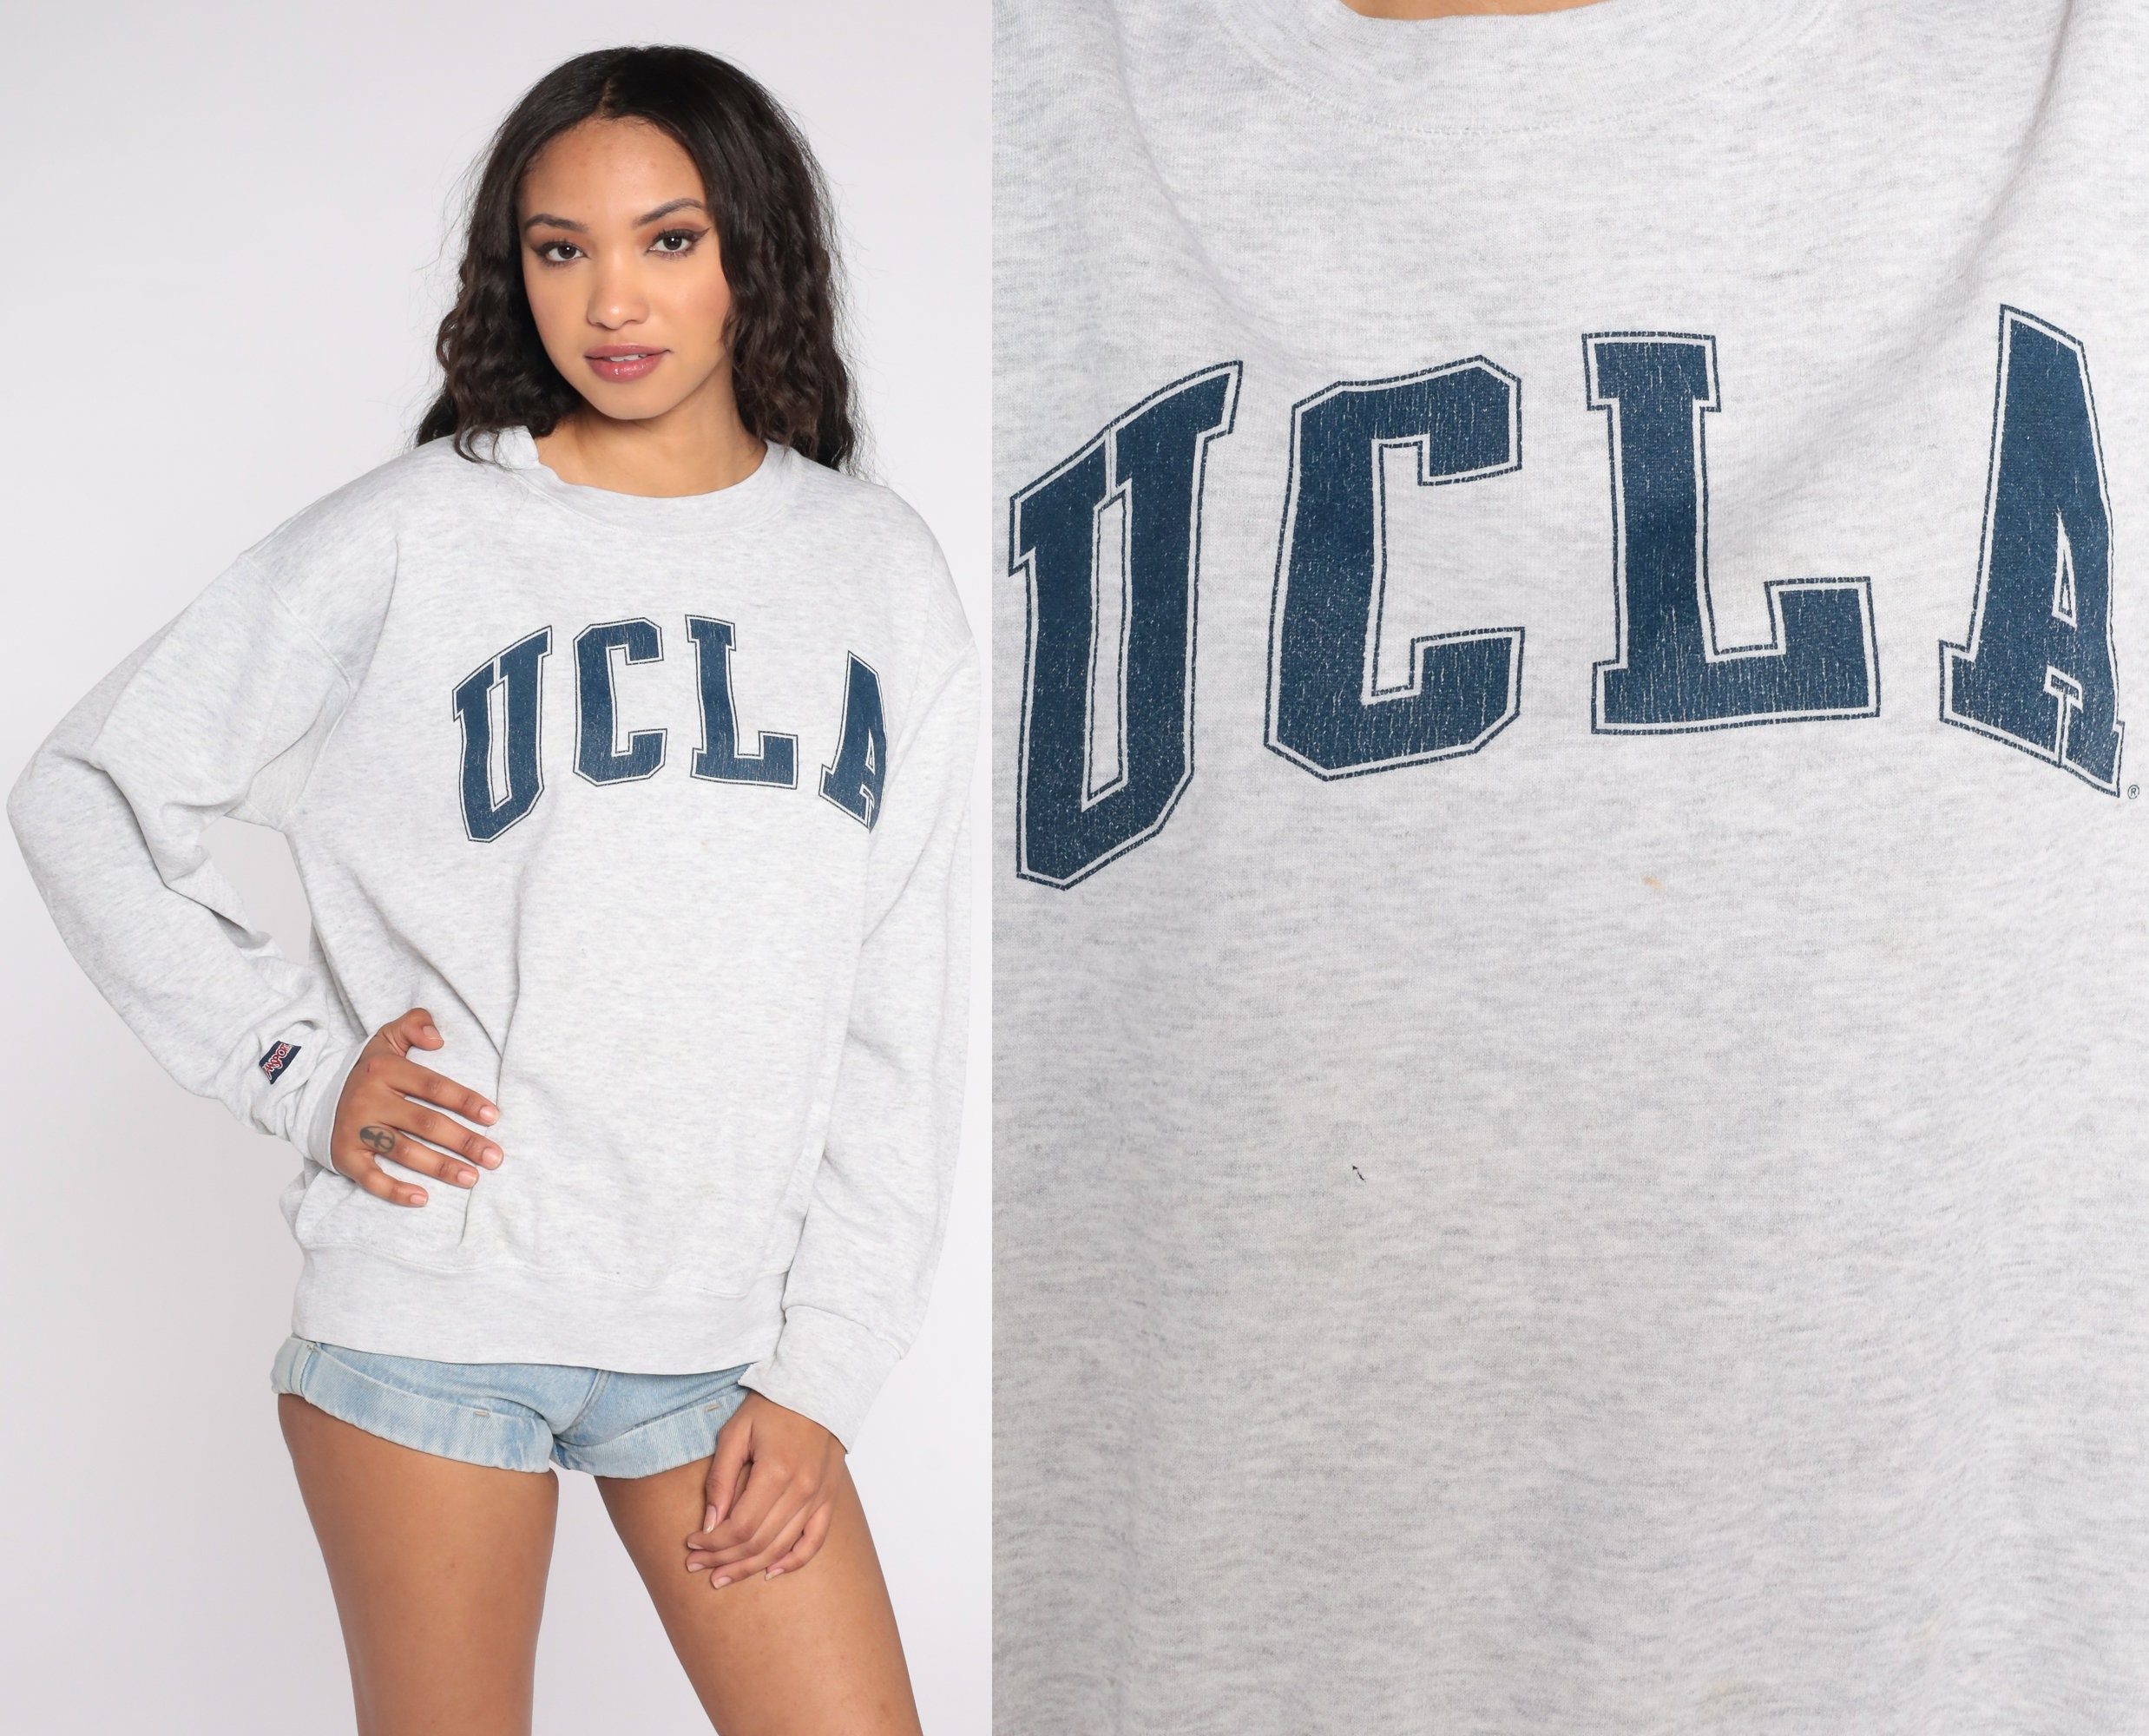 Cotton UCLA School Sweater